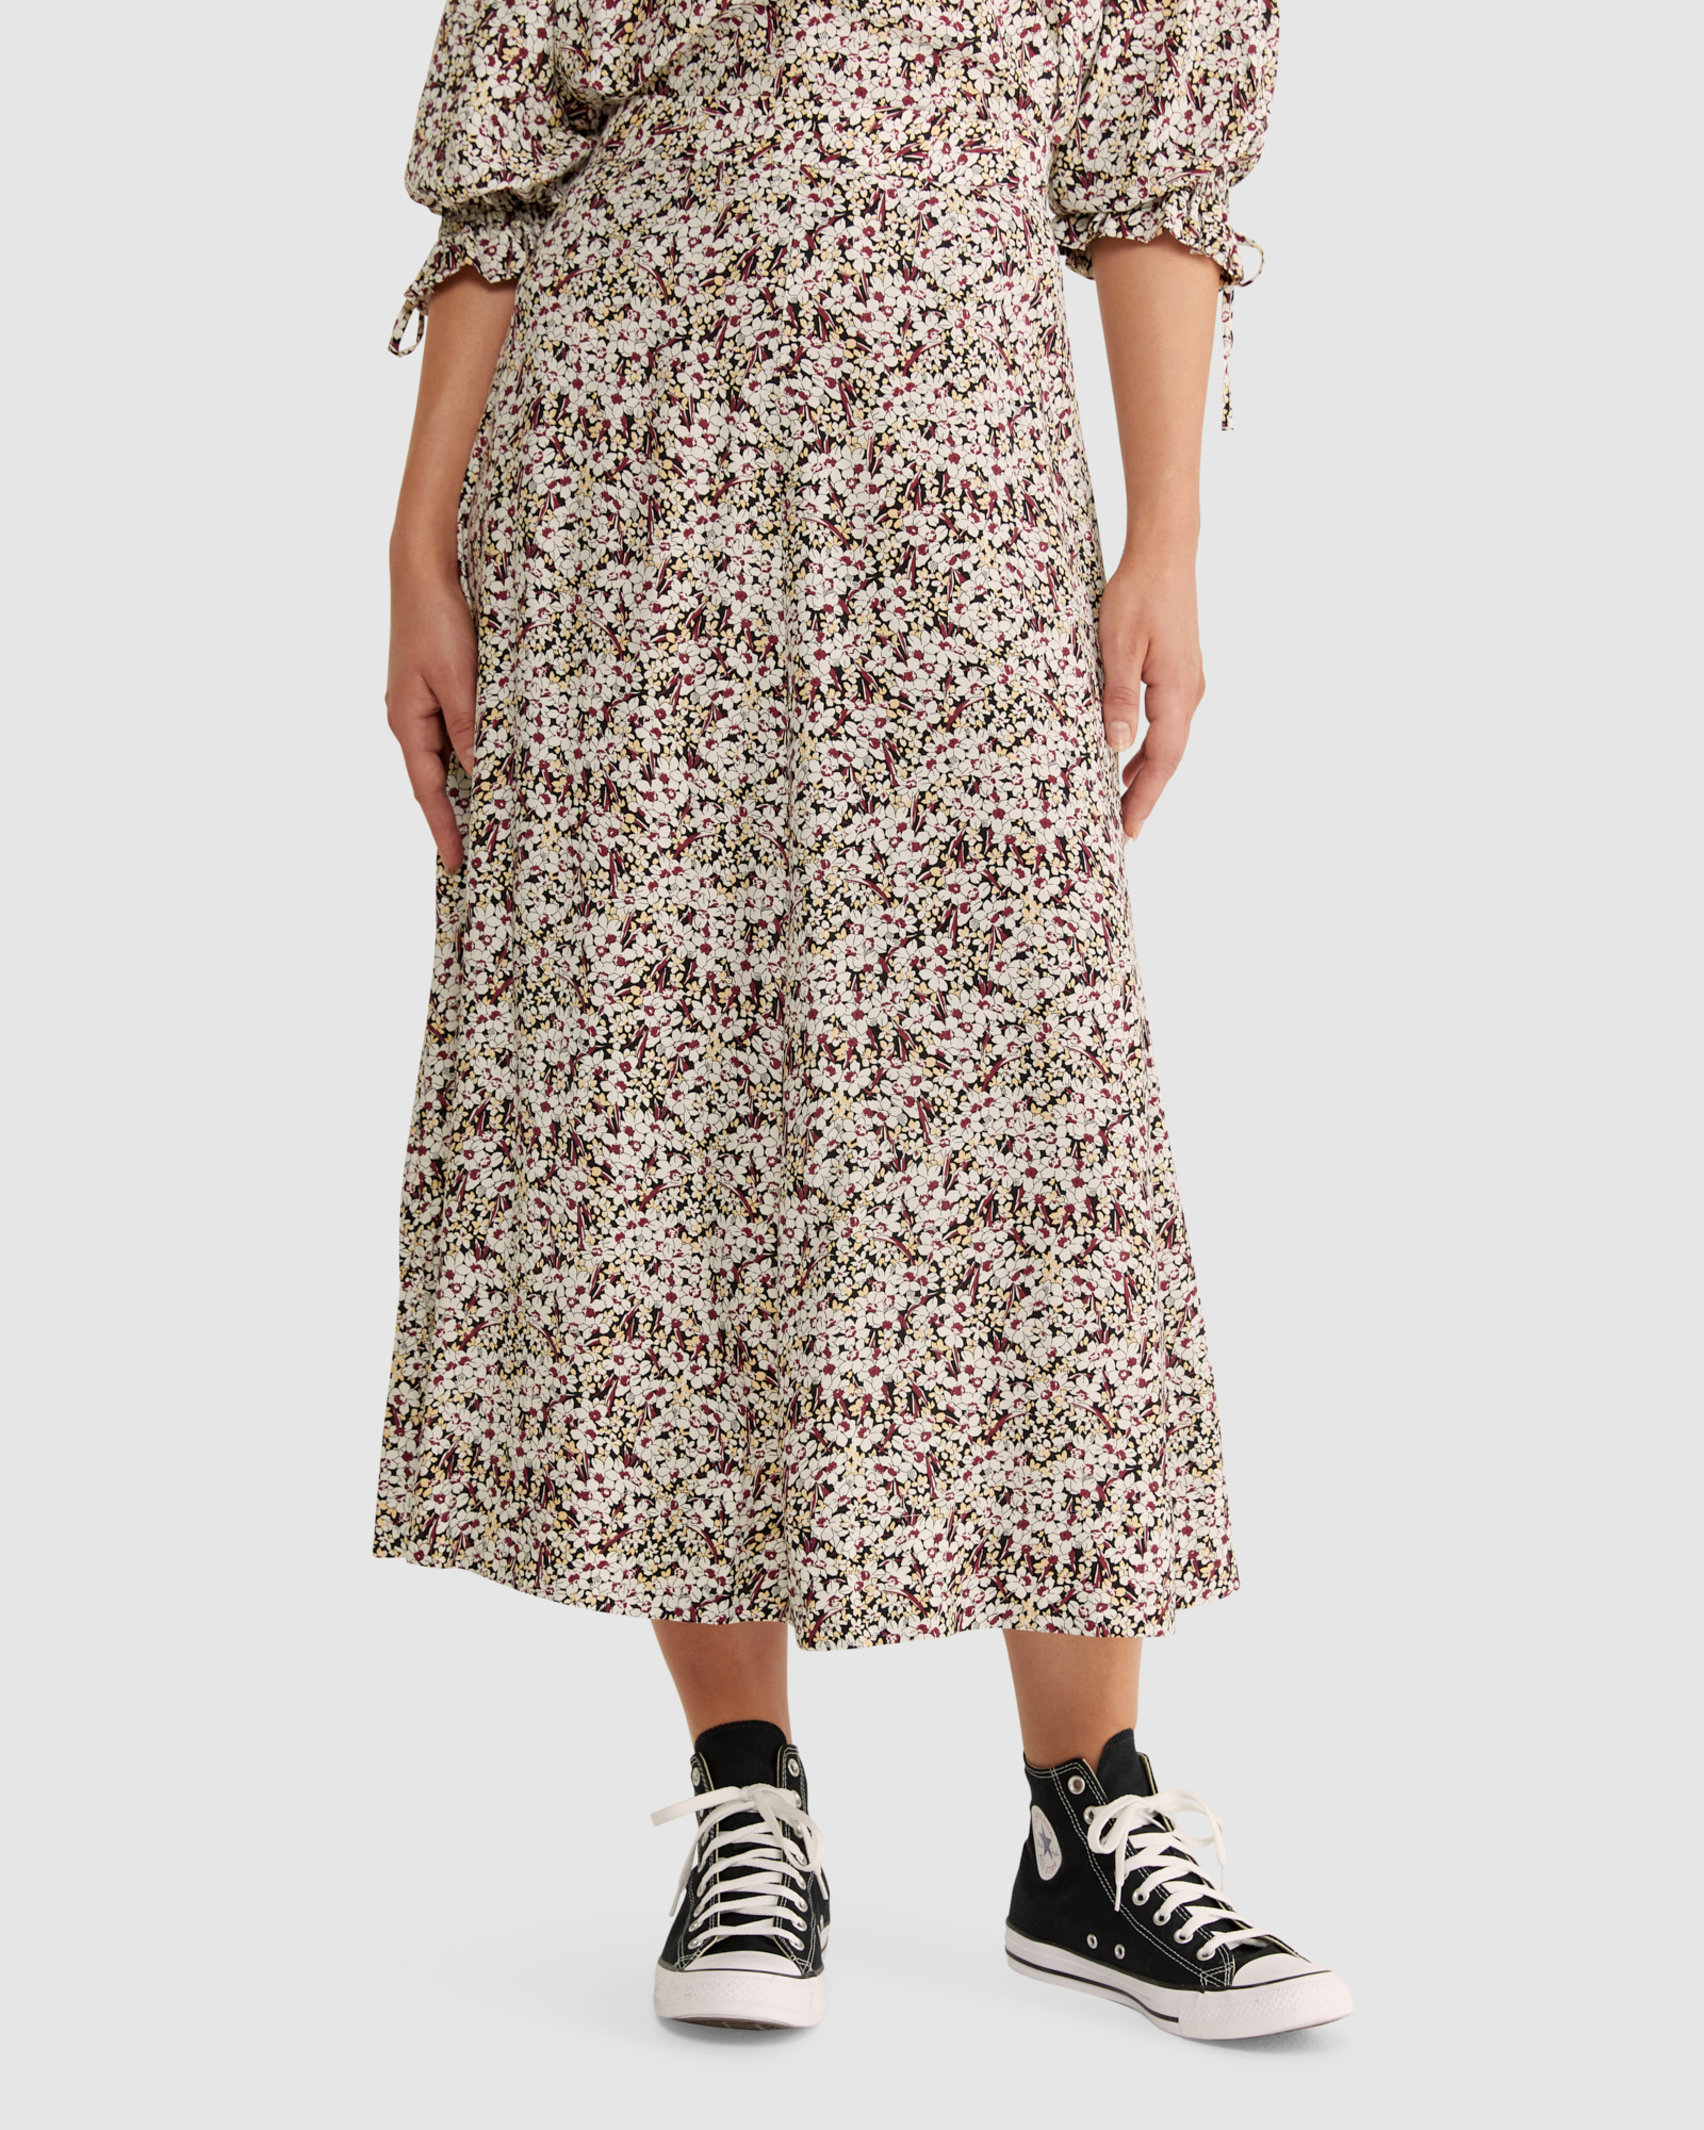 Fleur Floral Skirt in MULTI